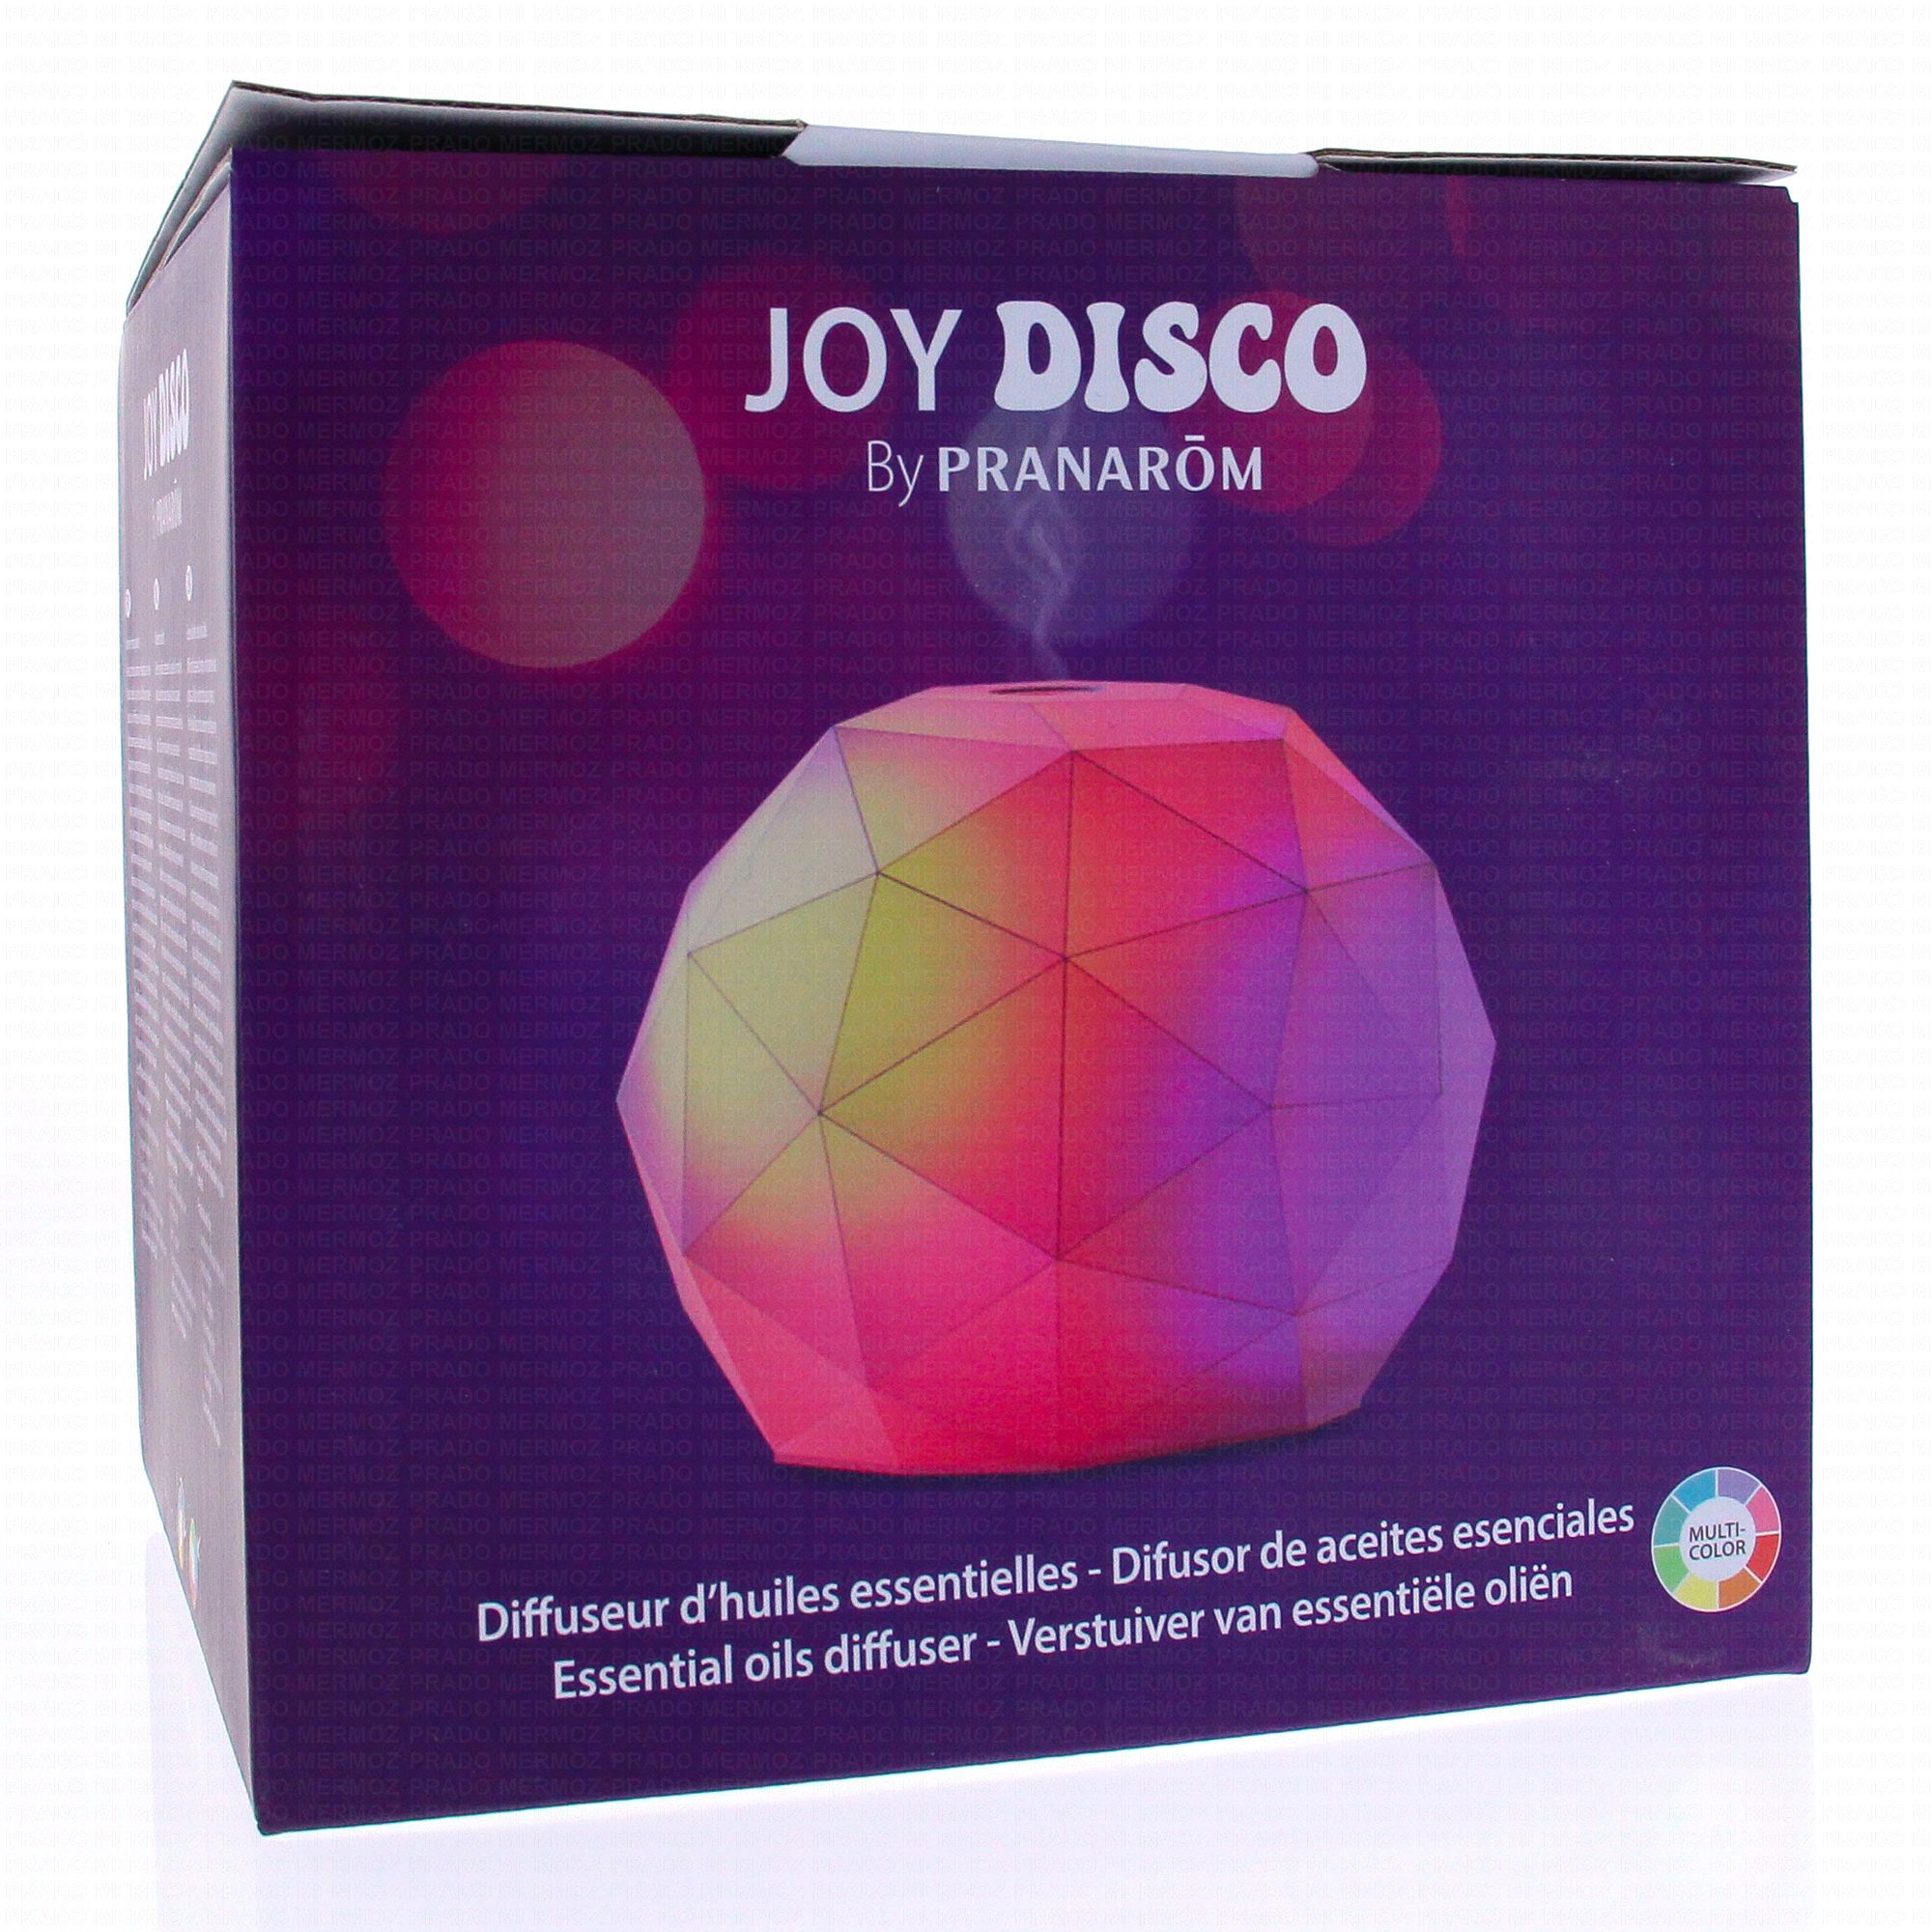 PRANAROM Diffuseur d'huiles essentielles joy disco - Pharmacie